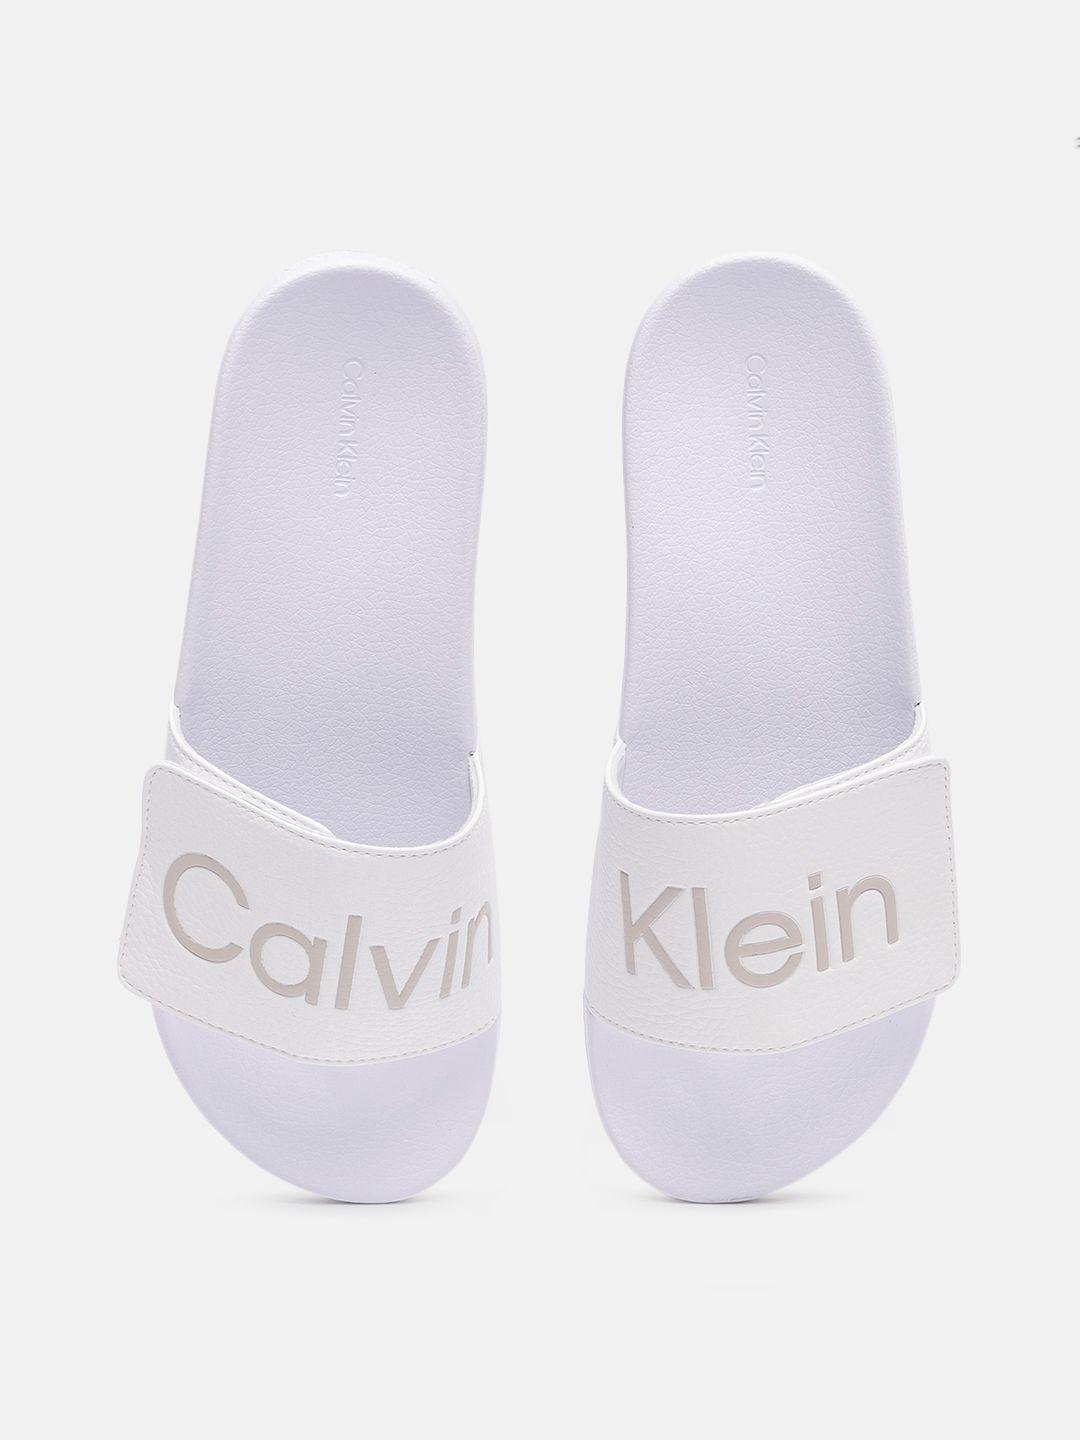 calvin-klein-jeans-men-brand-logo-printed-sliders